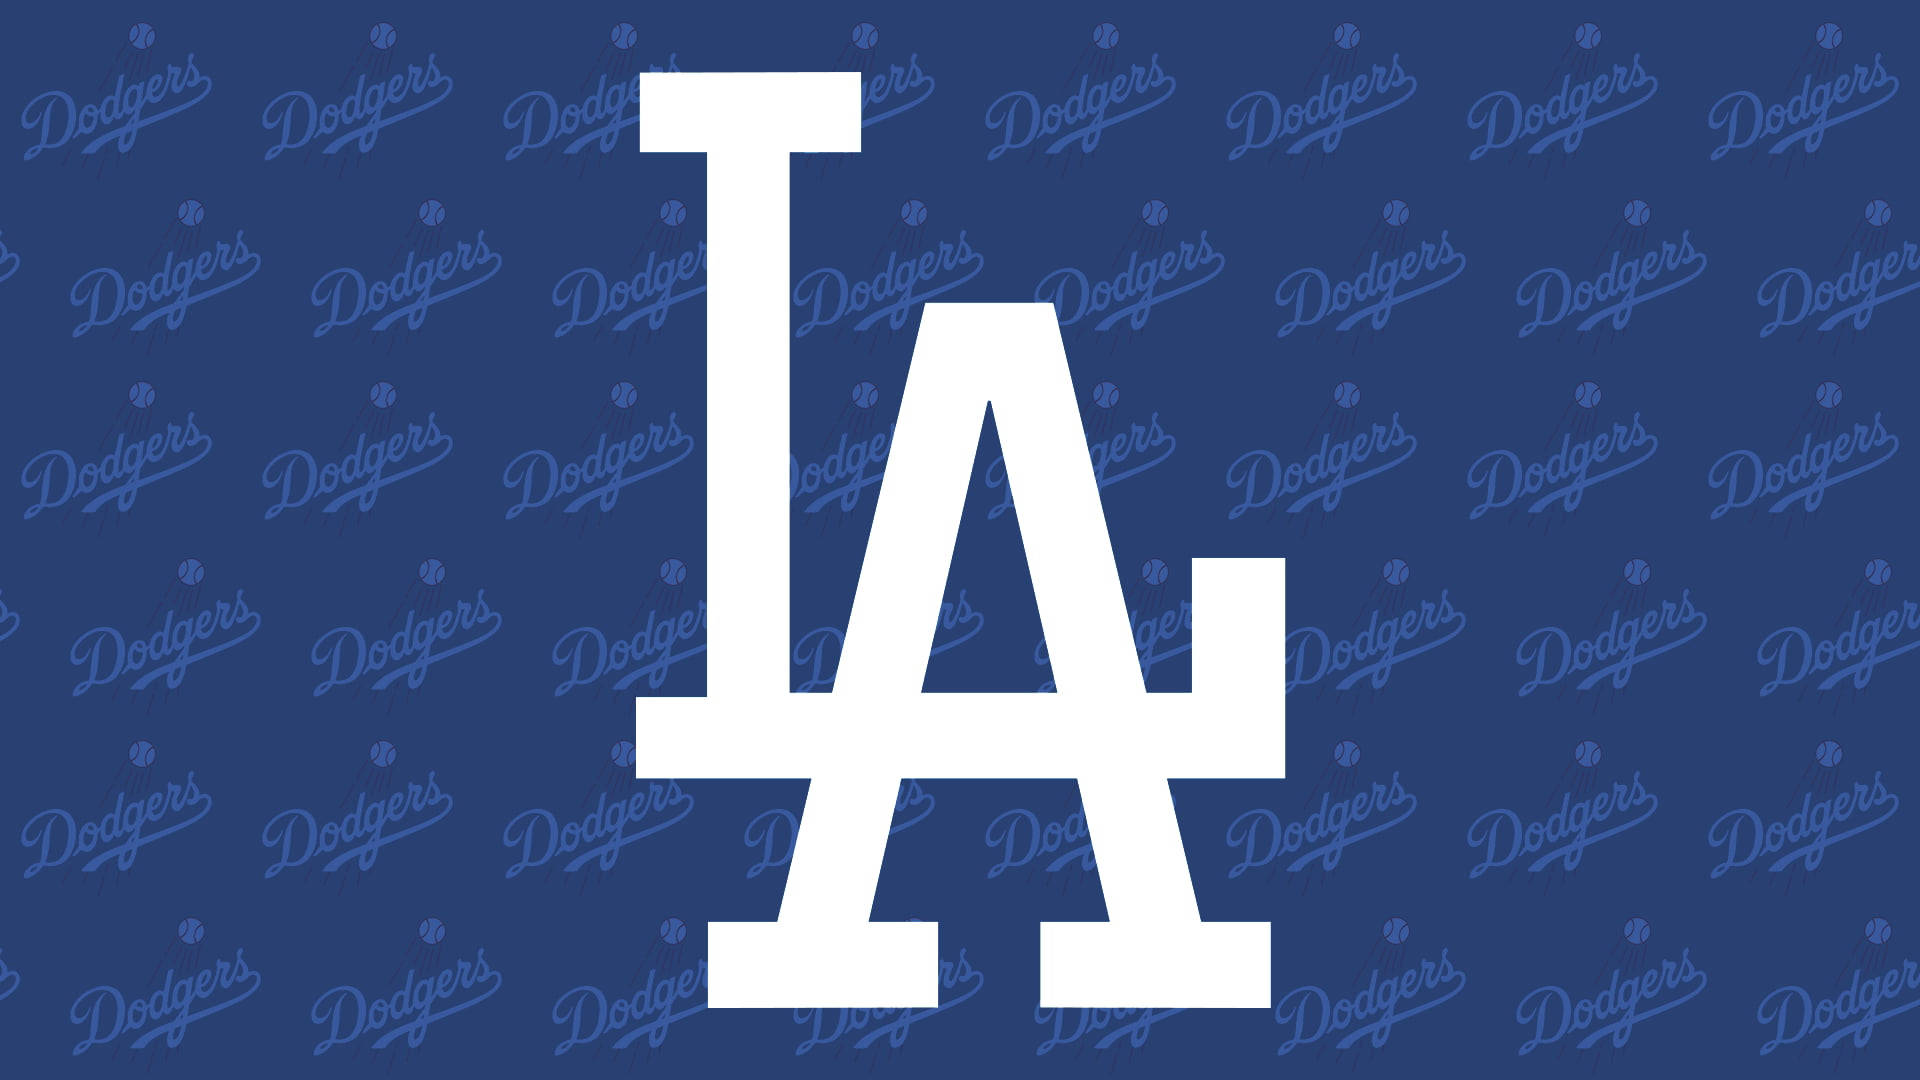 La Dodgers Logo Pattern Background